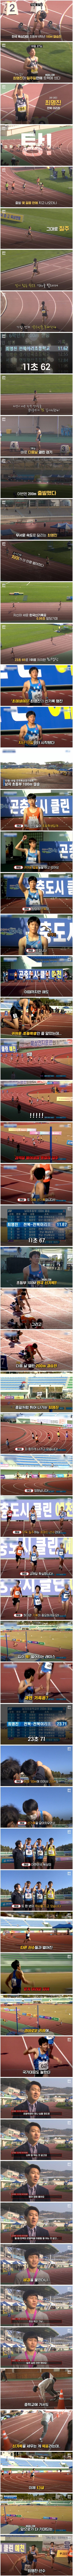 200m에서 또 신기록을 세운 육상 초딩 최명진